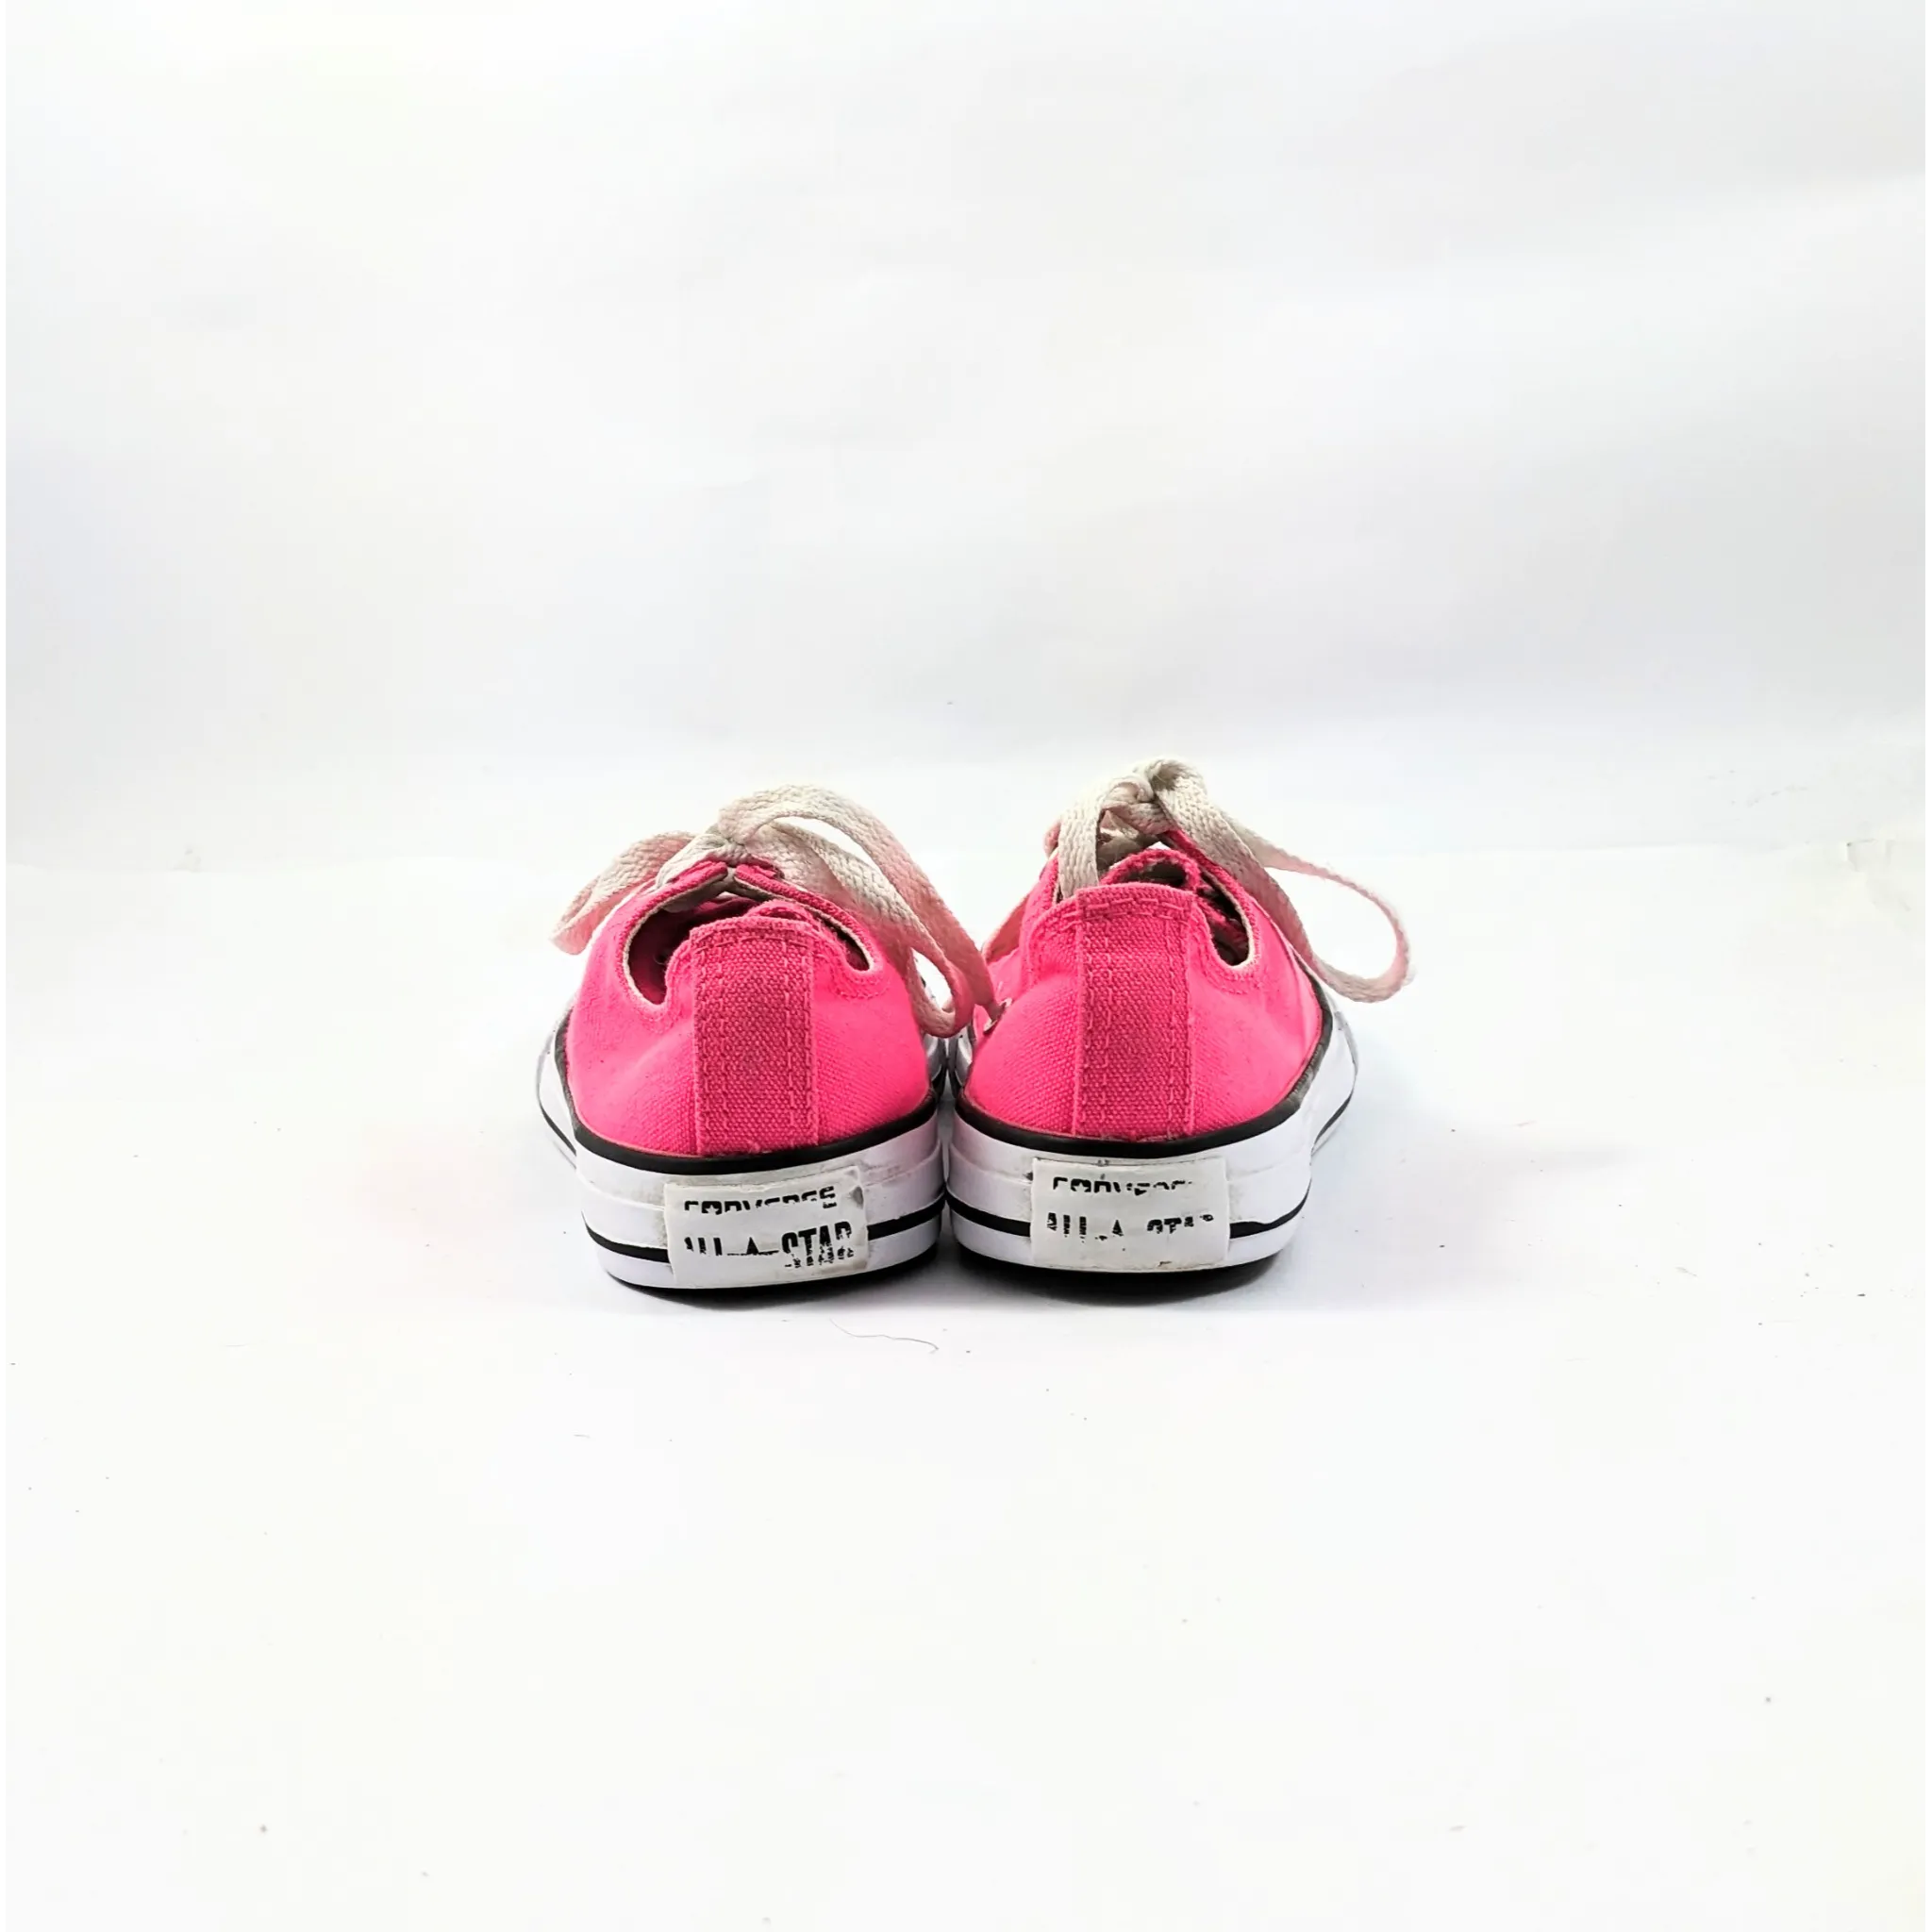 Converse Pink Sneakers